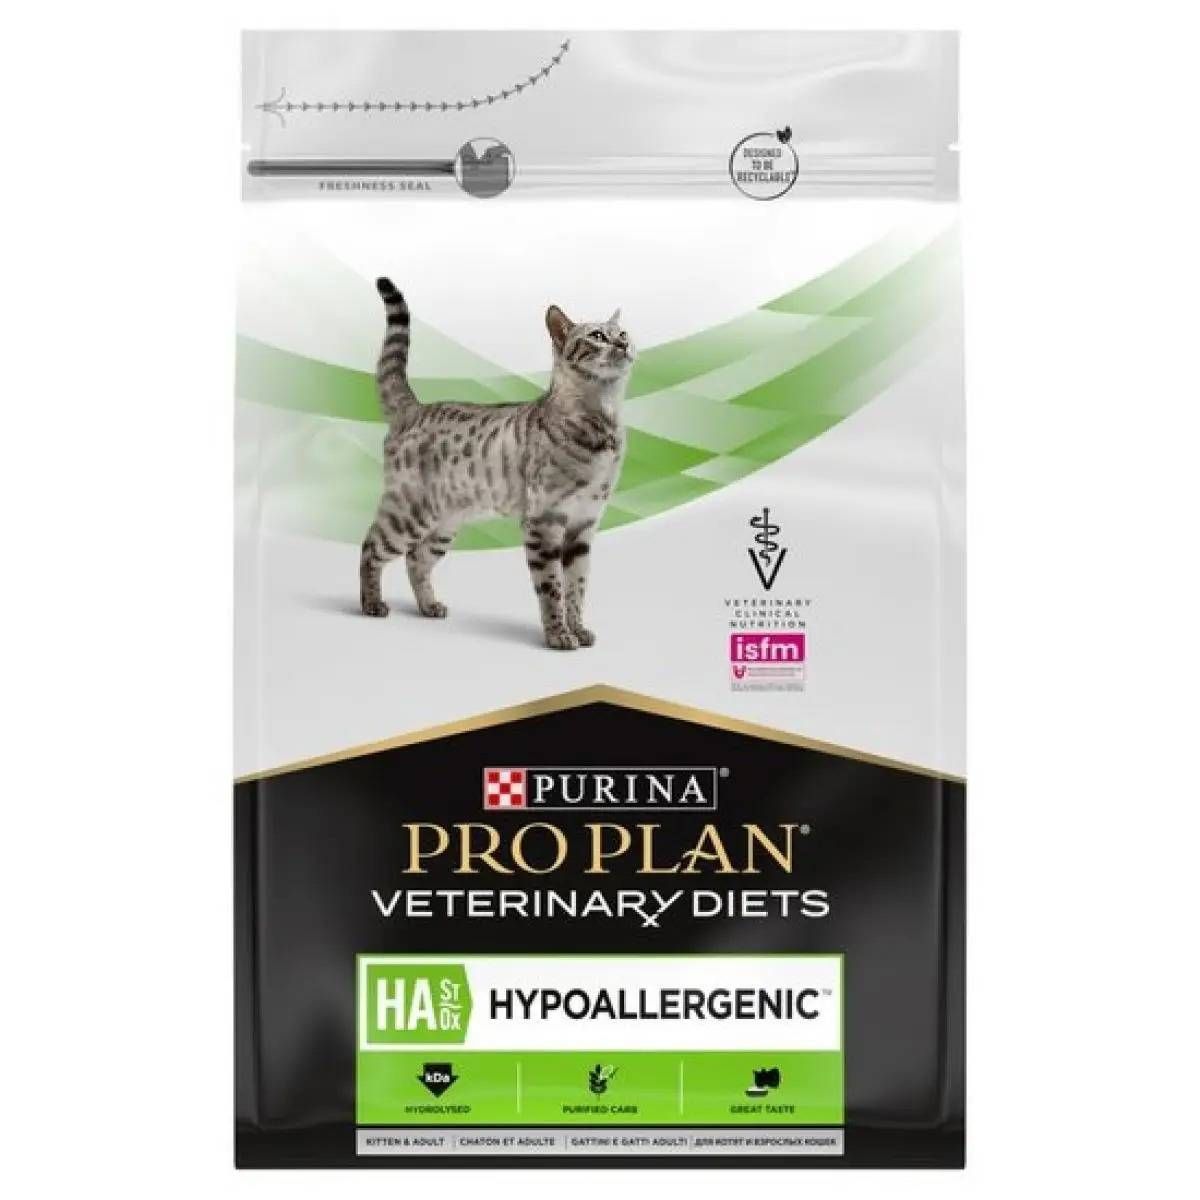 Purina Veterinary Diets Feline HA, Hypoallergenic, 3.5 Kg